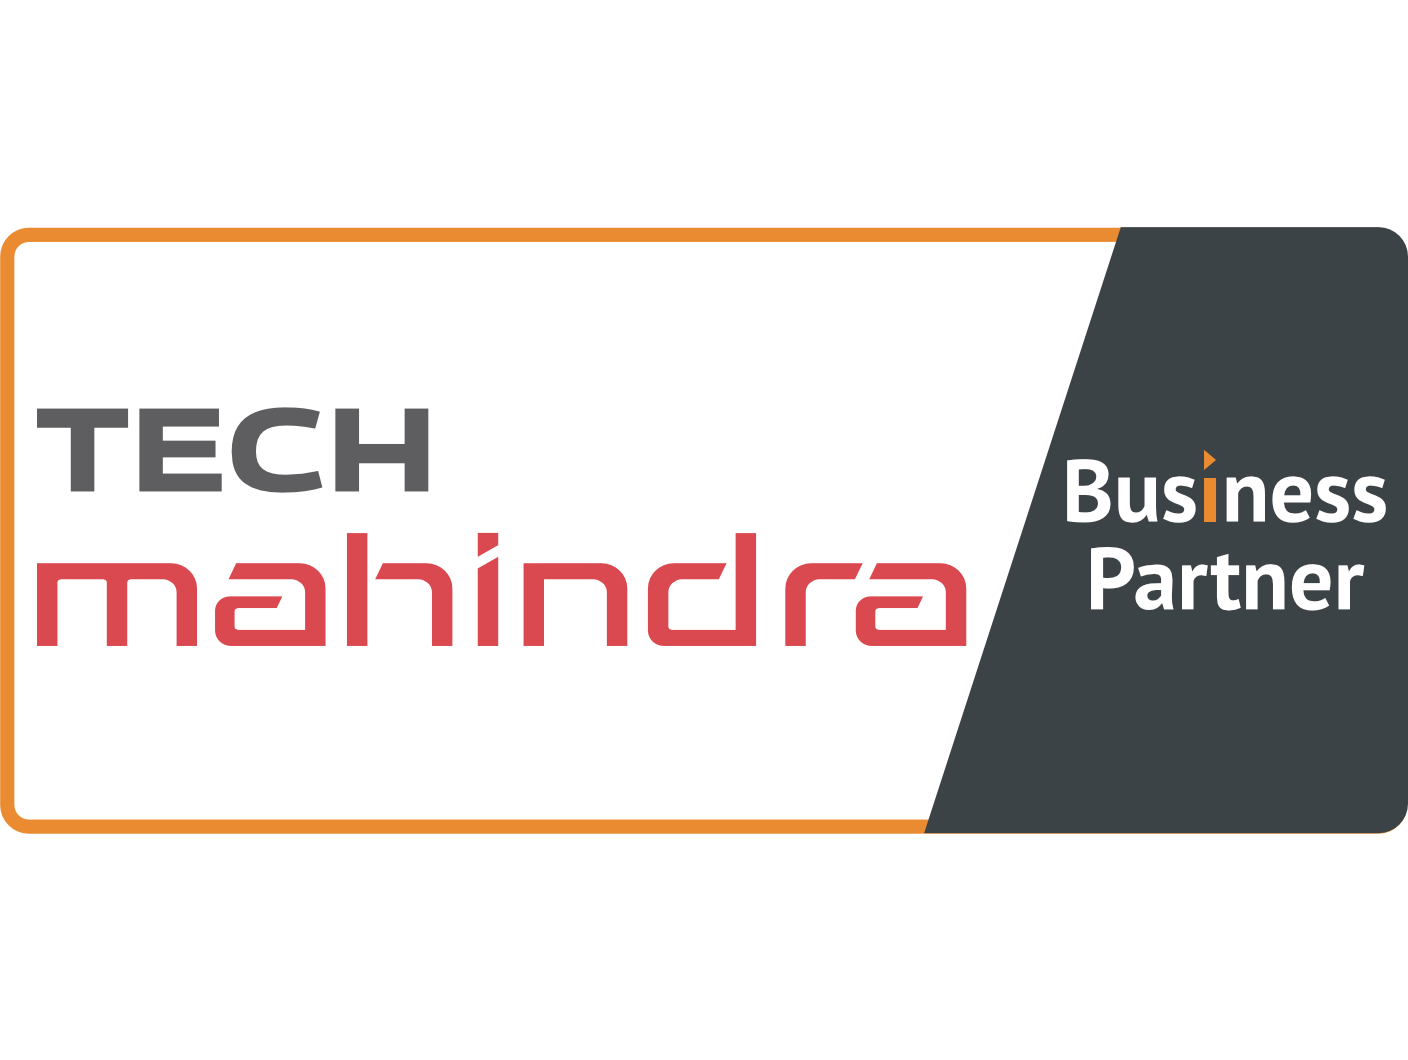 Tech Mahindra - Business Partner